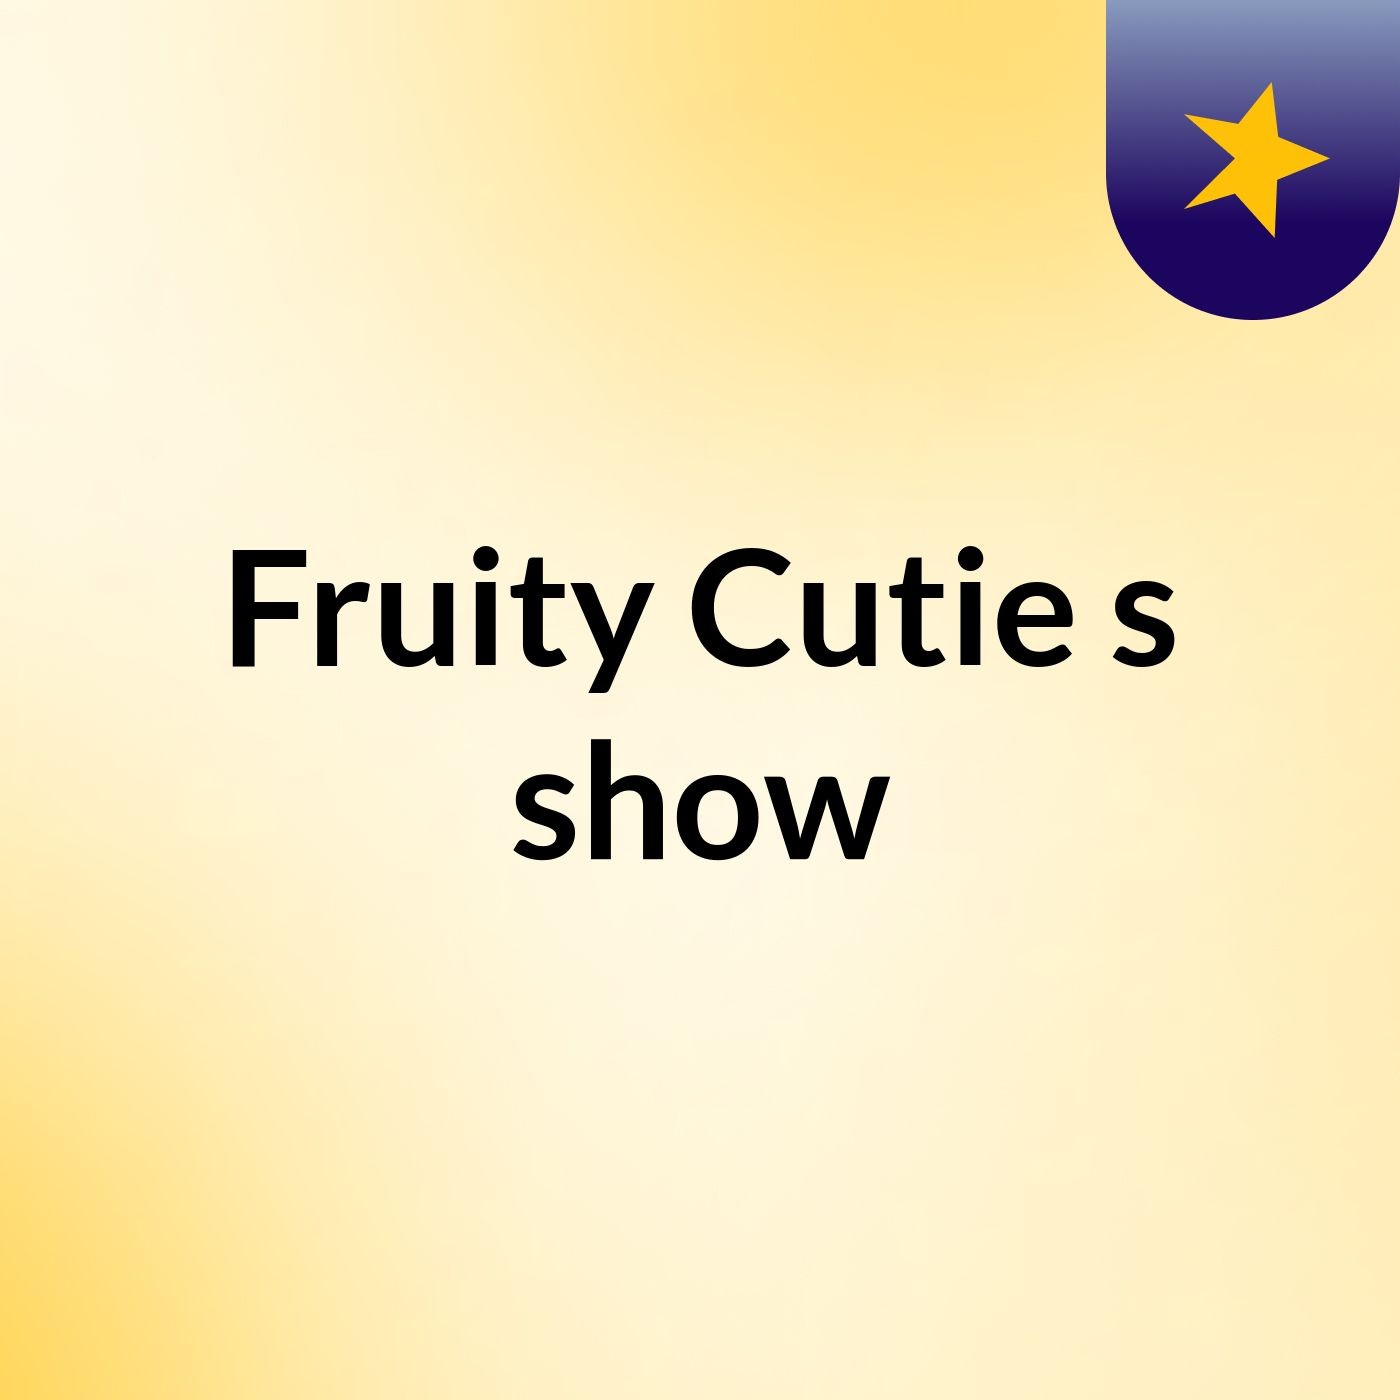 Fruity Cutie's show